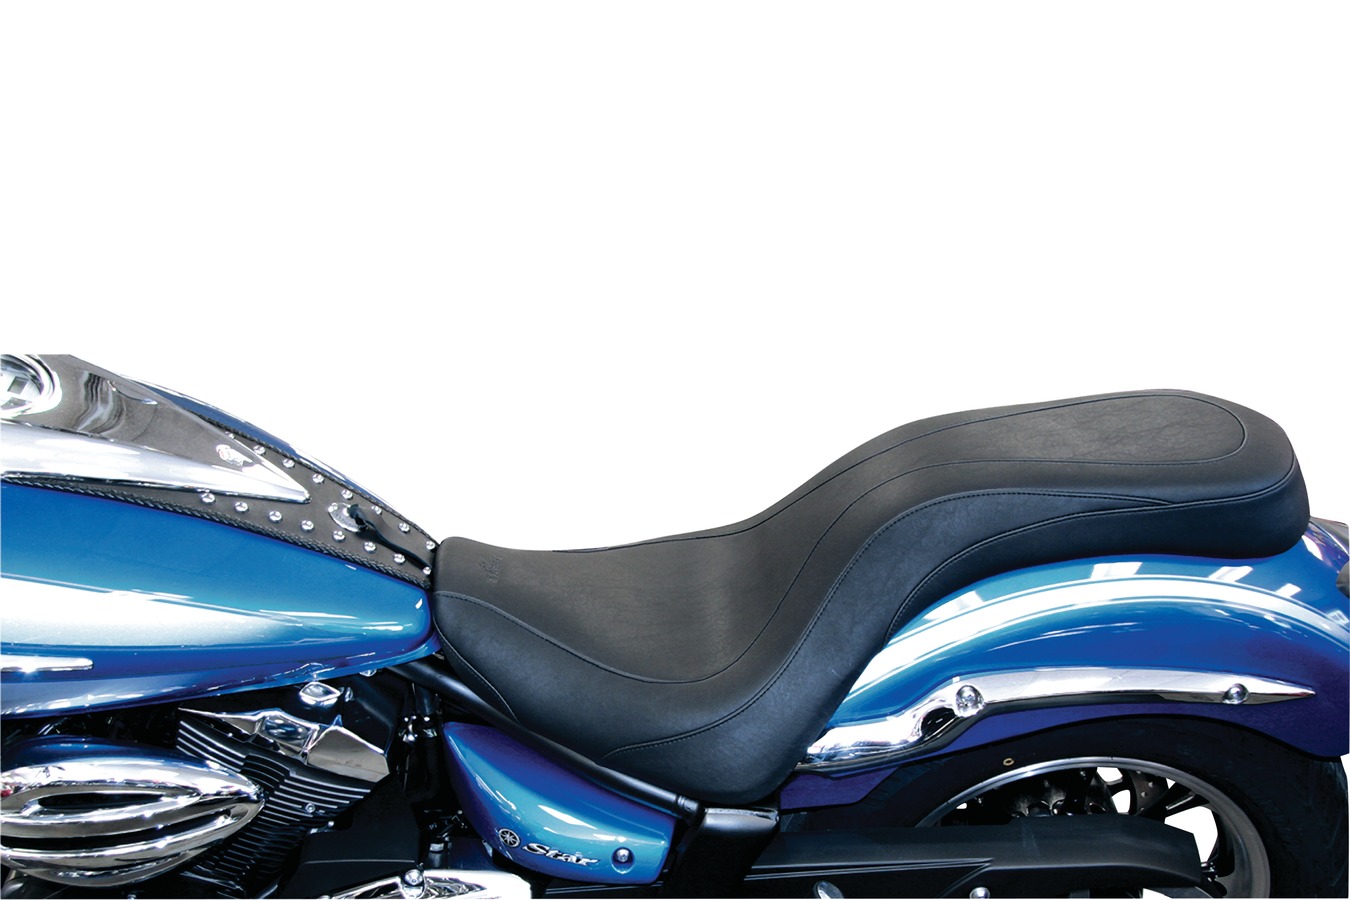 DayTripper™ One-Piece Seat for Yamaha V-Star 950 & 950 Tourer 2009-